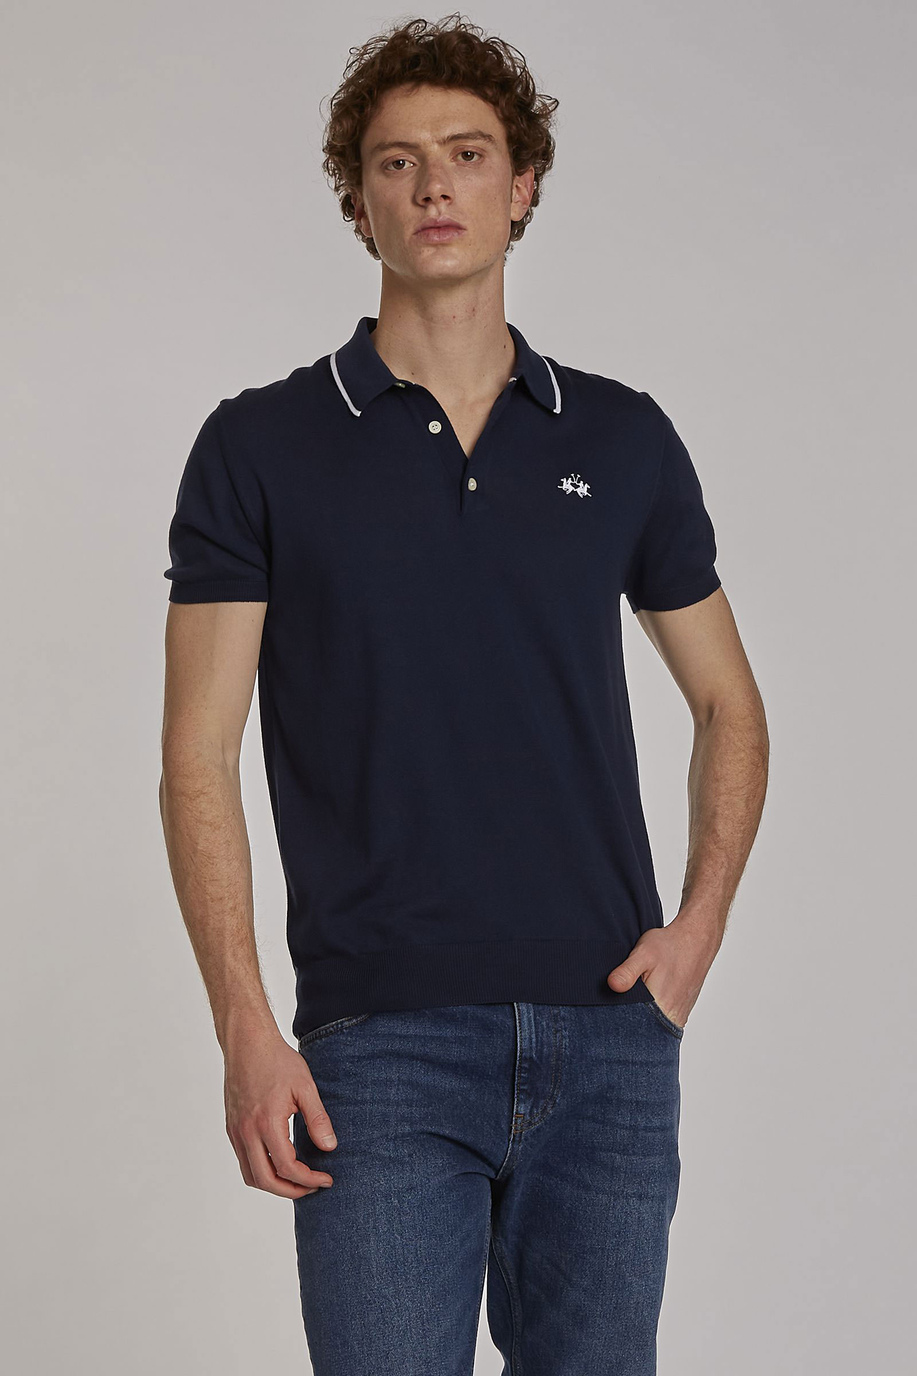 Herren-Poloshirt mit kurzen Ärmeln aus Baumwolle im Regular Fit - Klassische Basics | La Martina - Official Online Shop